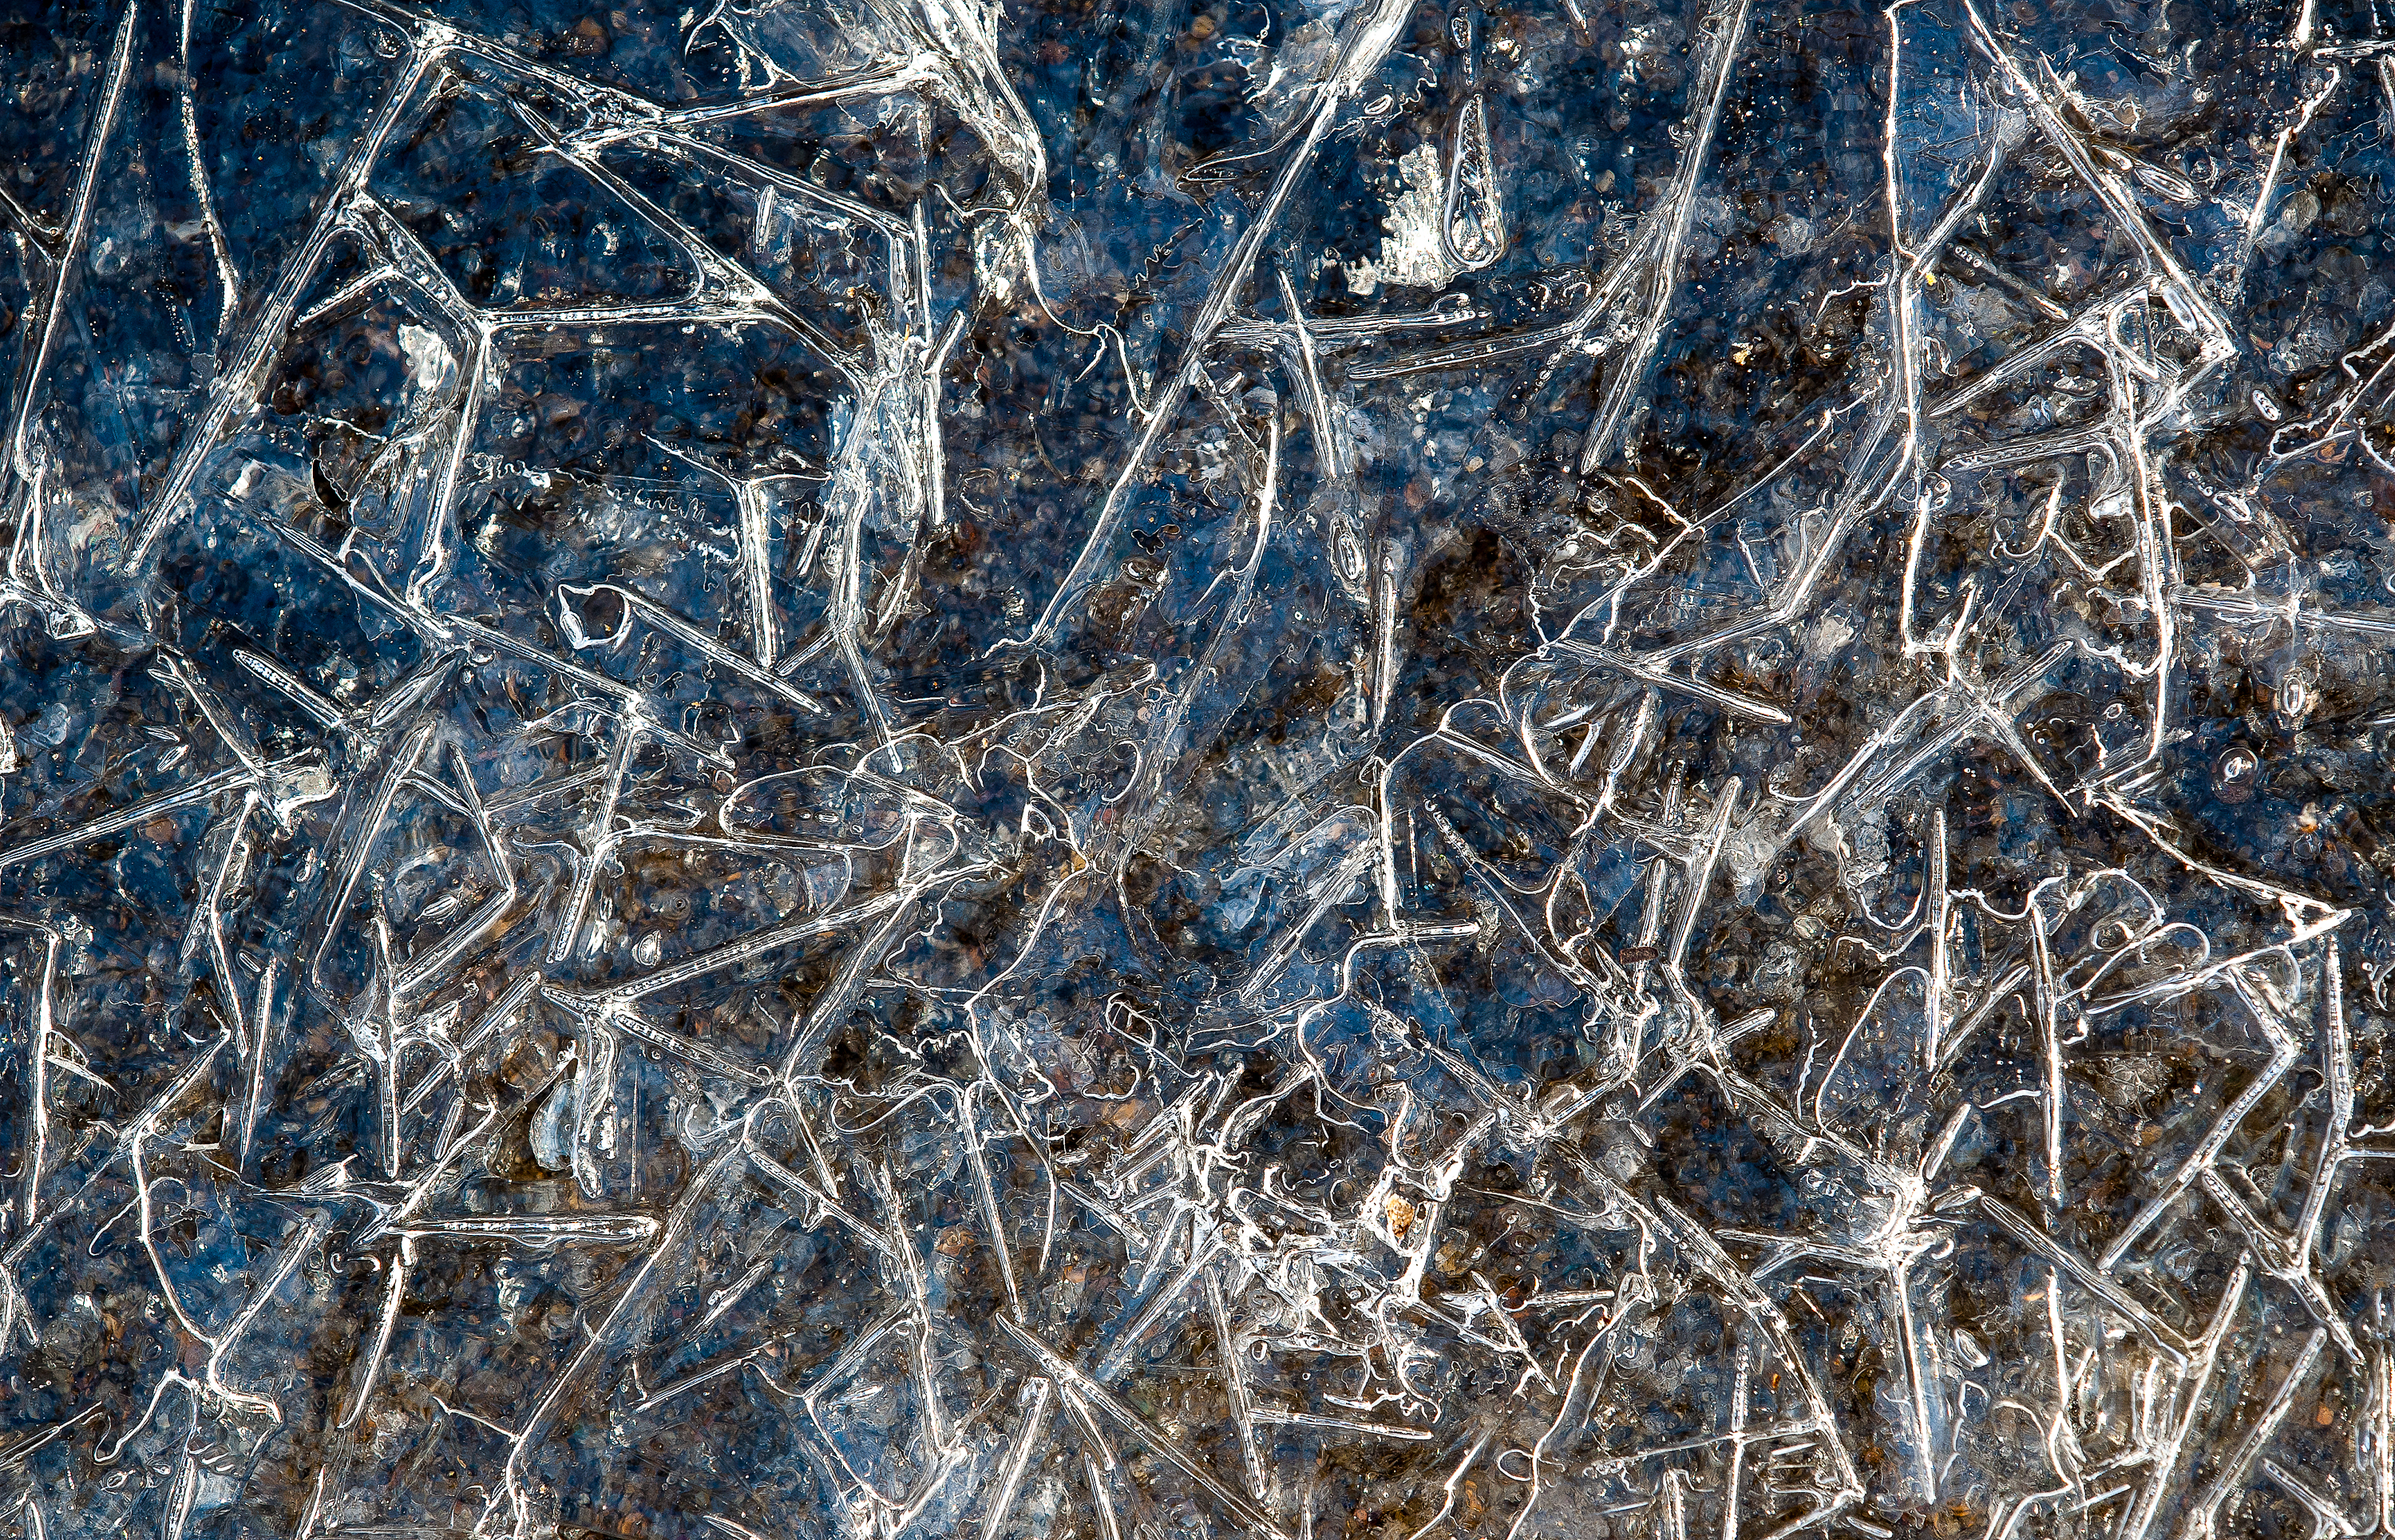 Ice crystals on asphalt, Chapel Hill, North Carolina (2011)